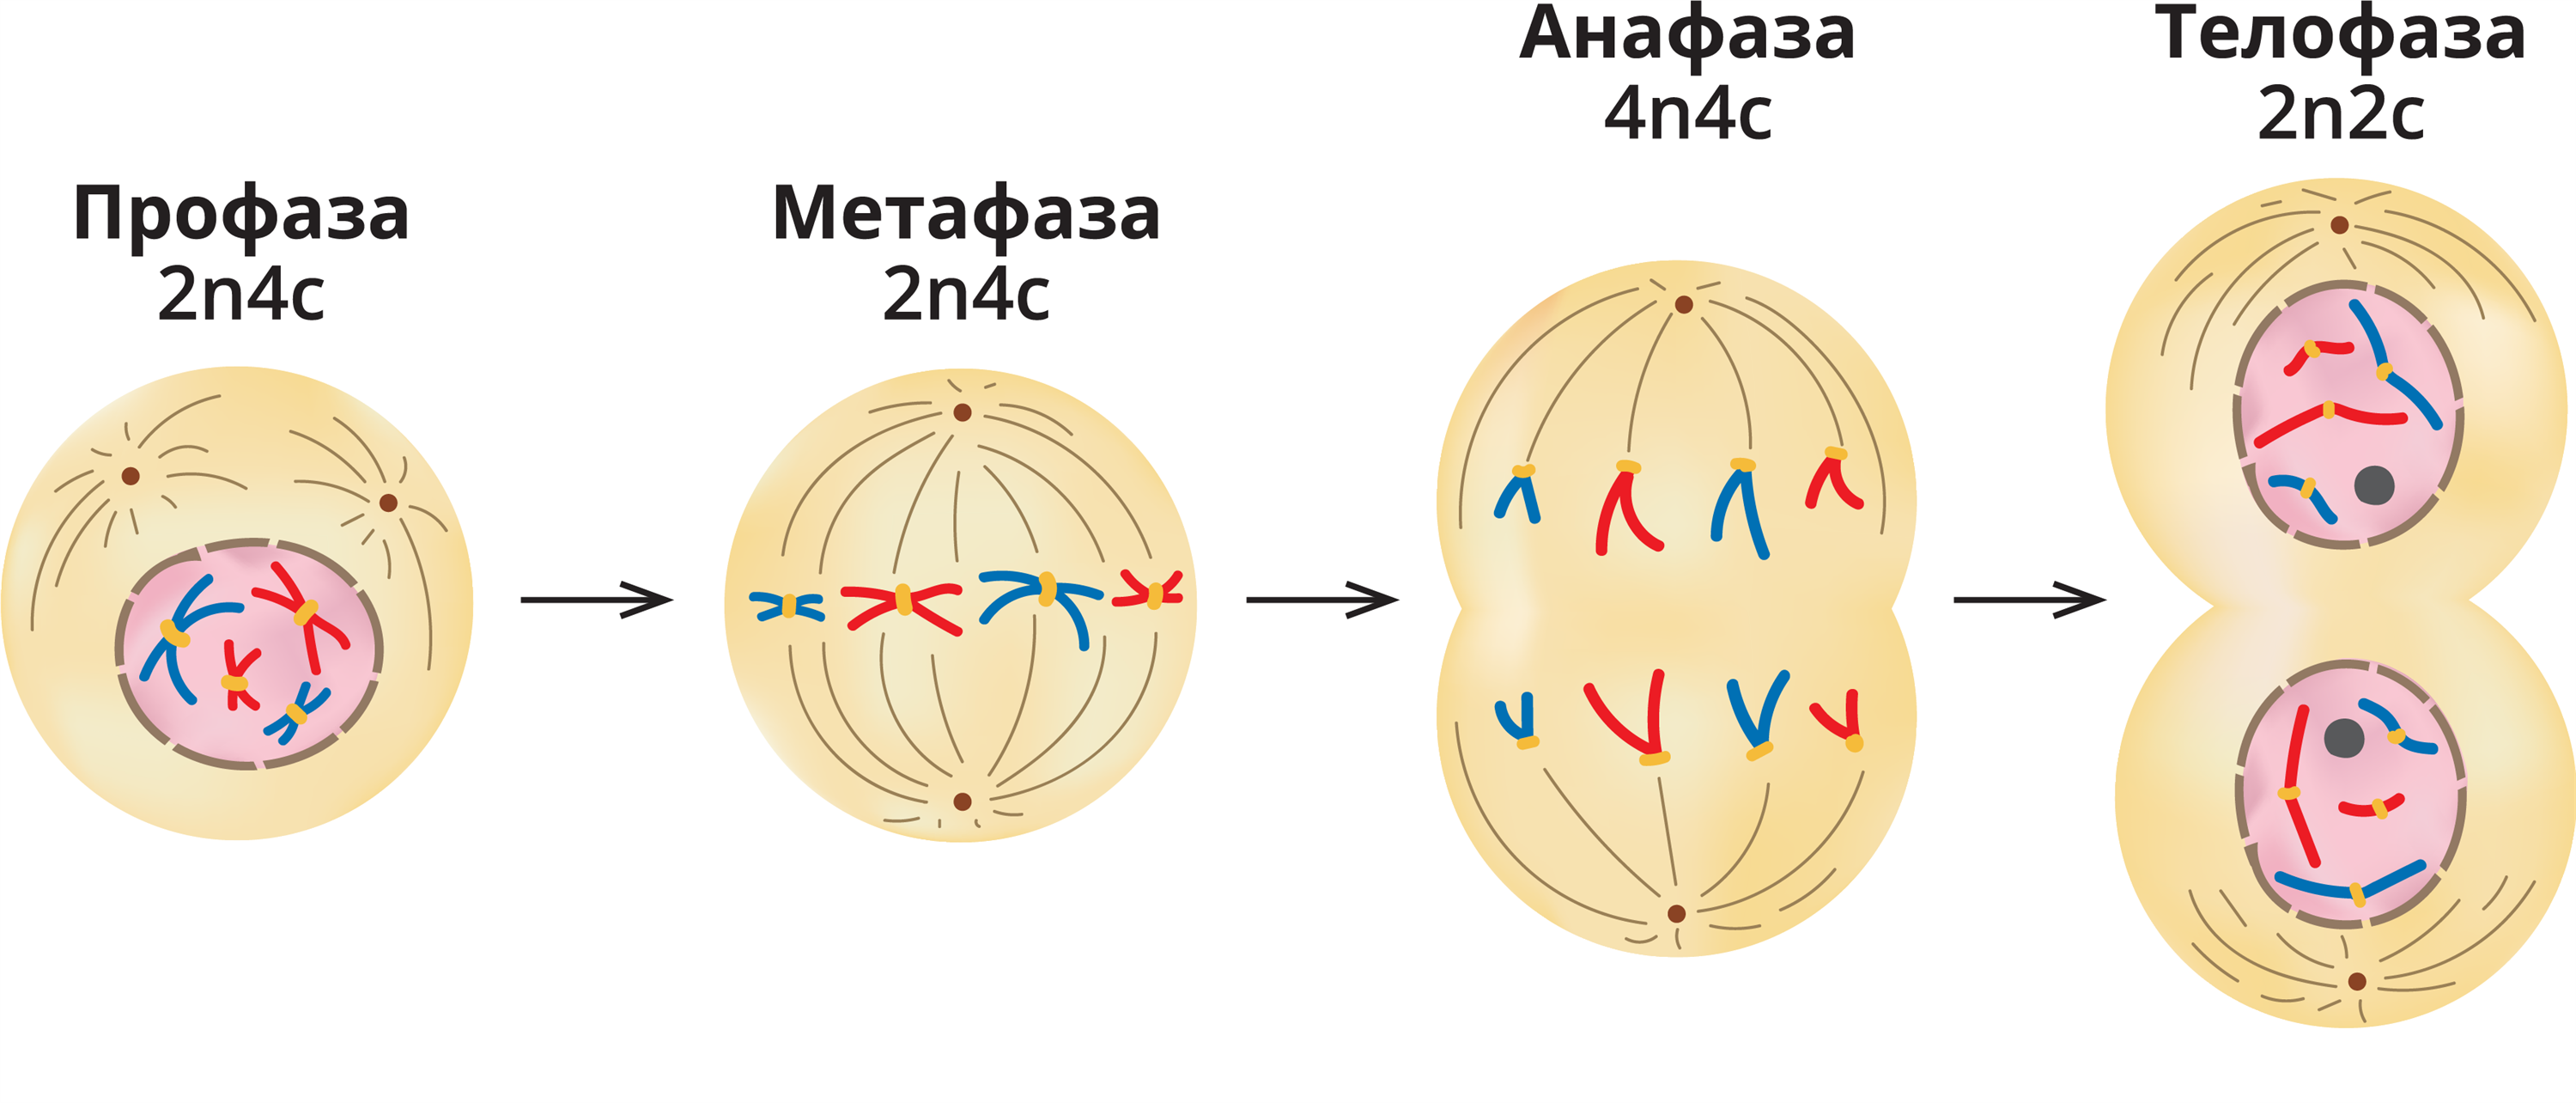 Мейоз анафаза 2 набор хромосом. Фазы деления клетки митоз рисунок. Фазы митоза схема. Профаза метафаза. Телофаза митоза.